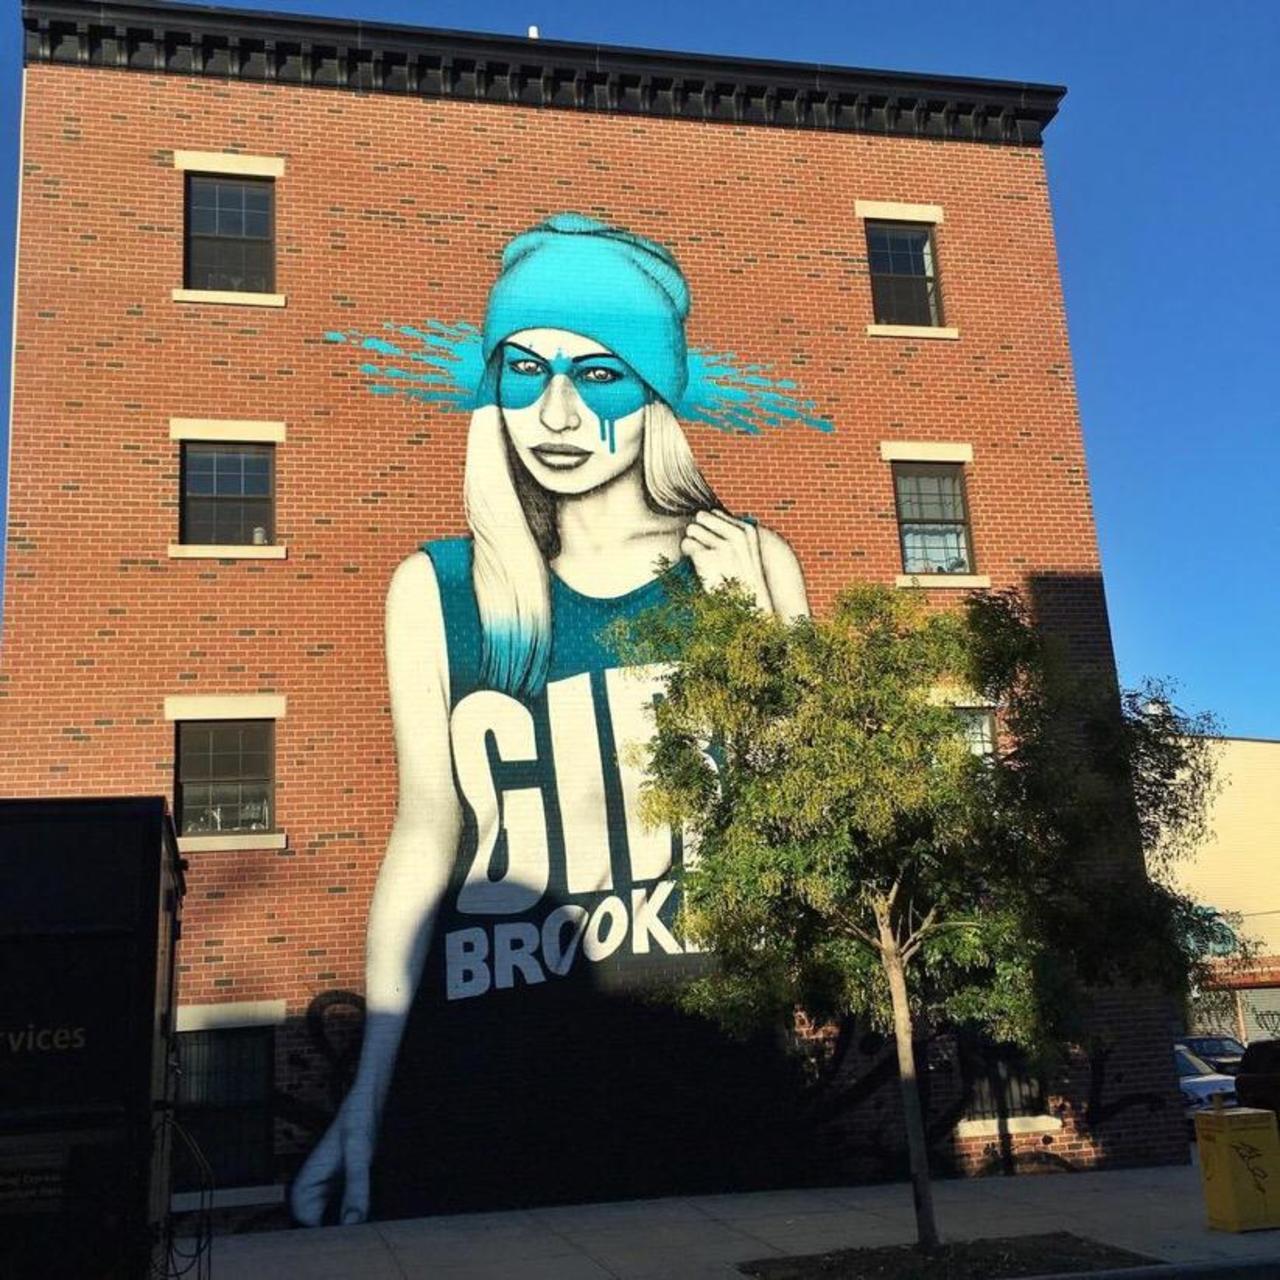 RT @richardbanfa: #streetart by #findac in #Brooklyn #nyc #switch #graffiti #bedifferent #arte #art http://t.co/tES2uO7PKc